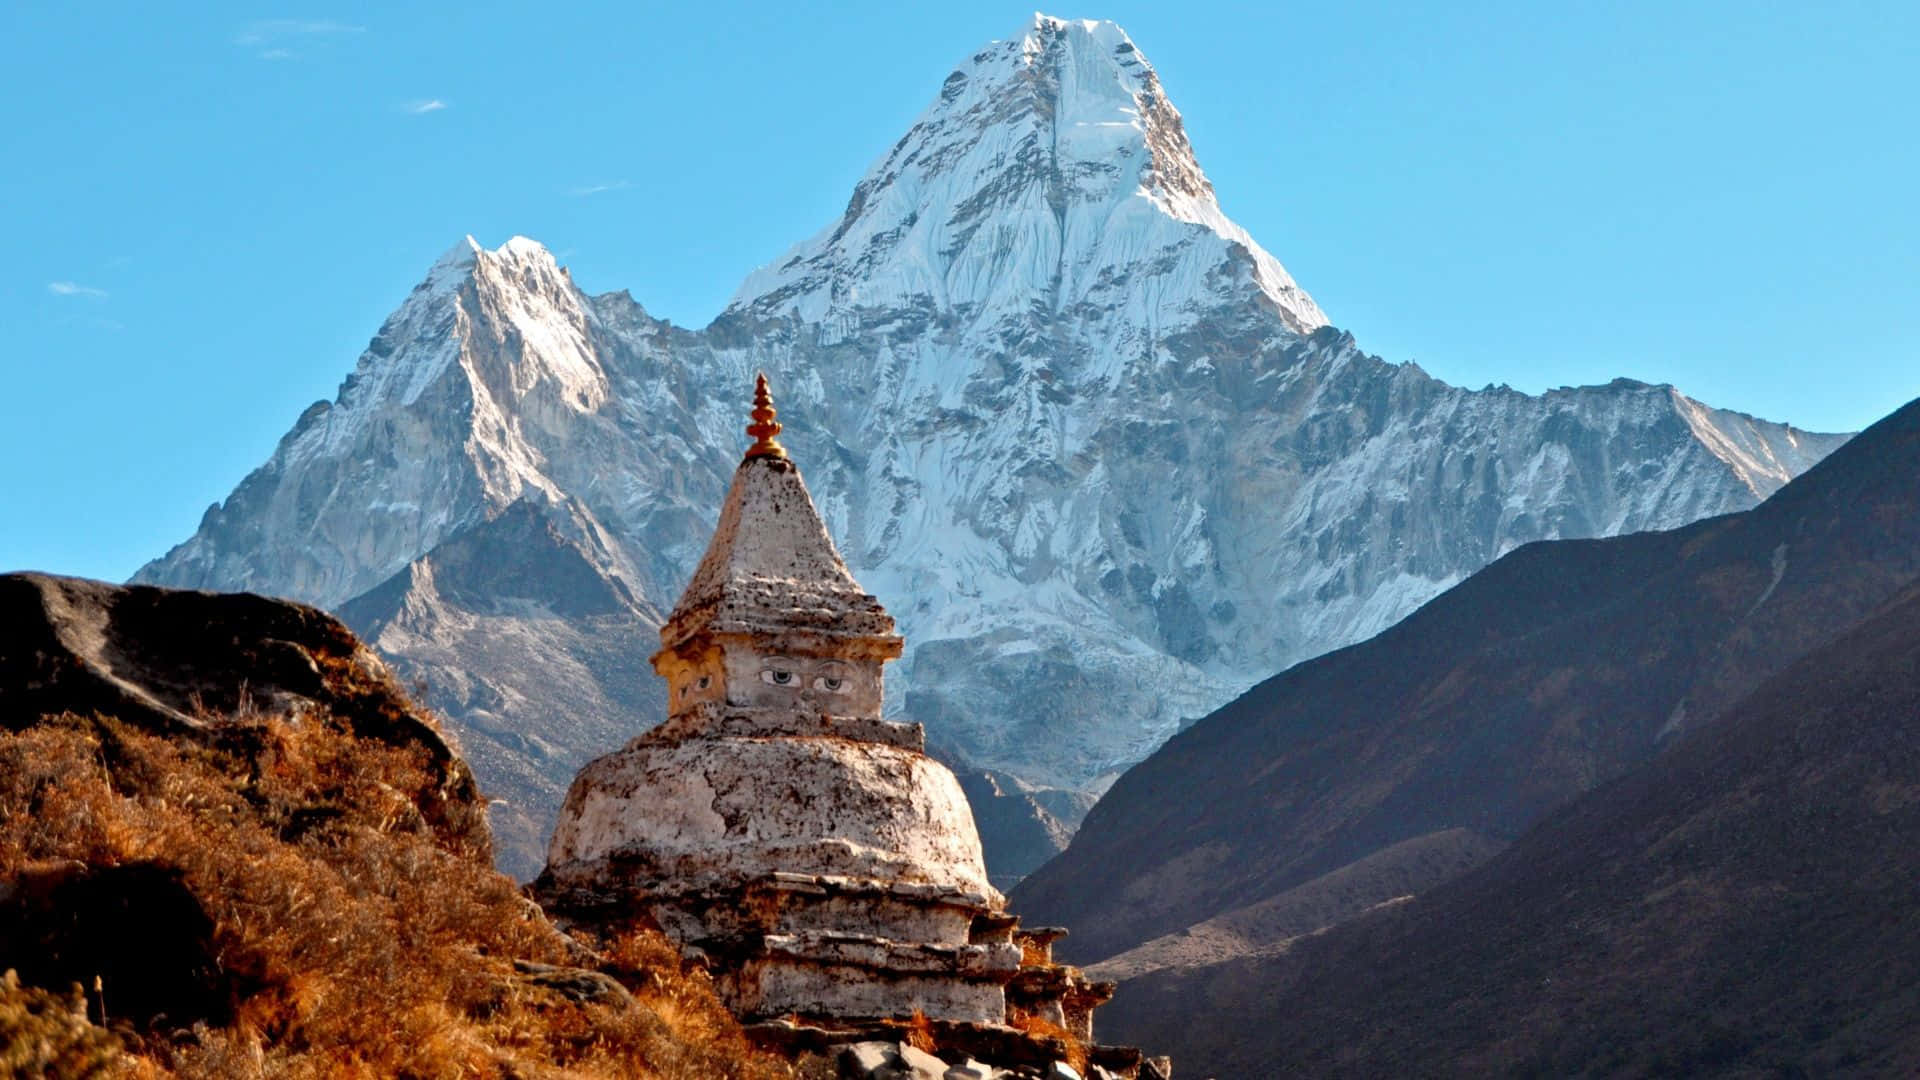 Nature's Majesty - The Himalayas